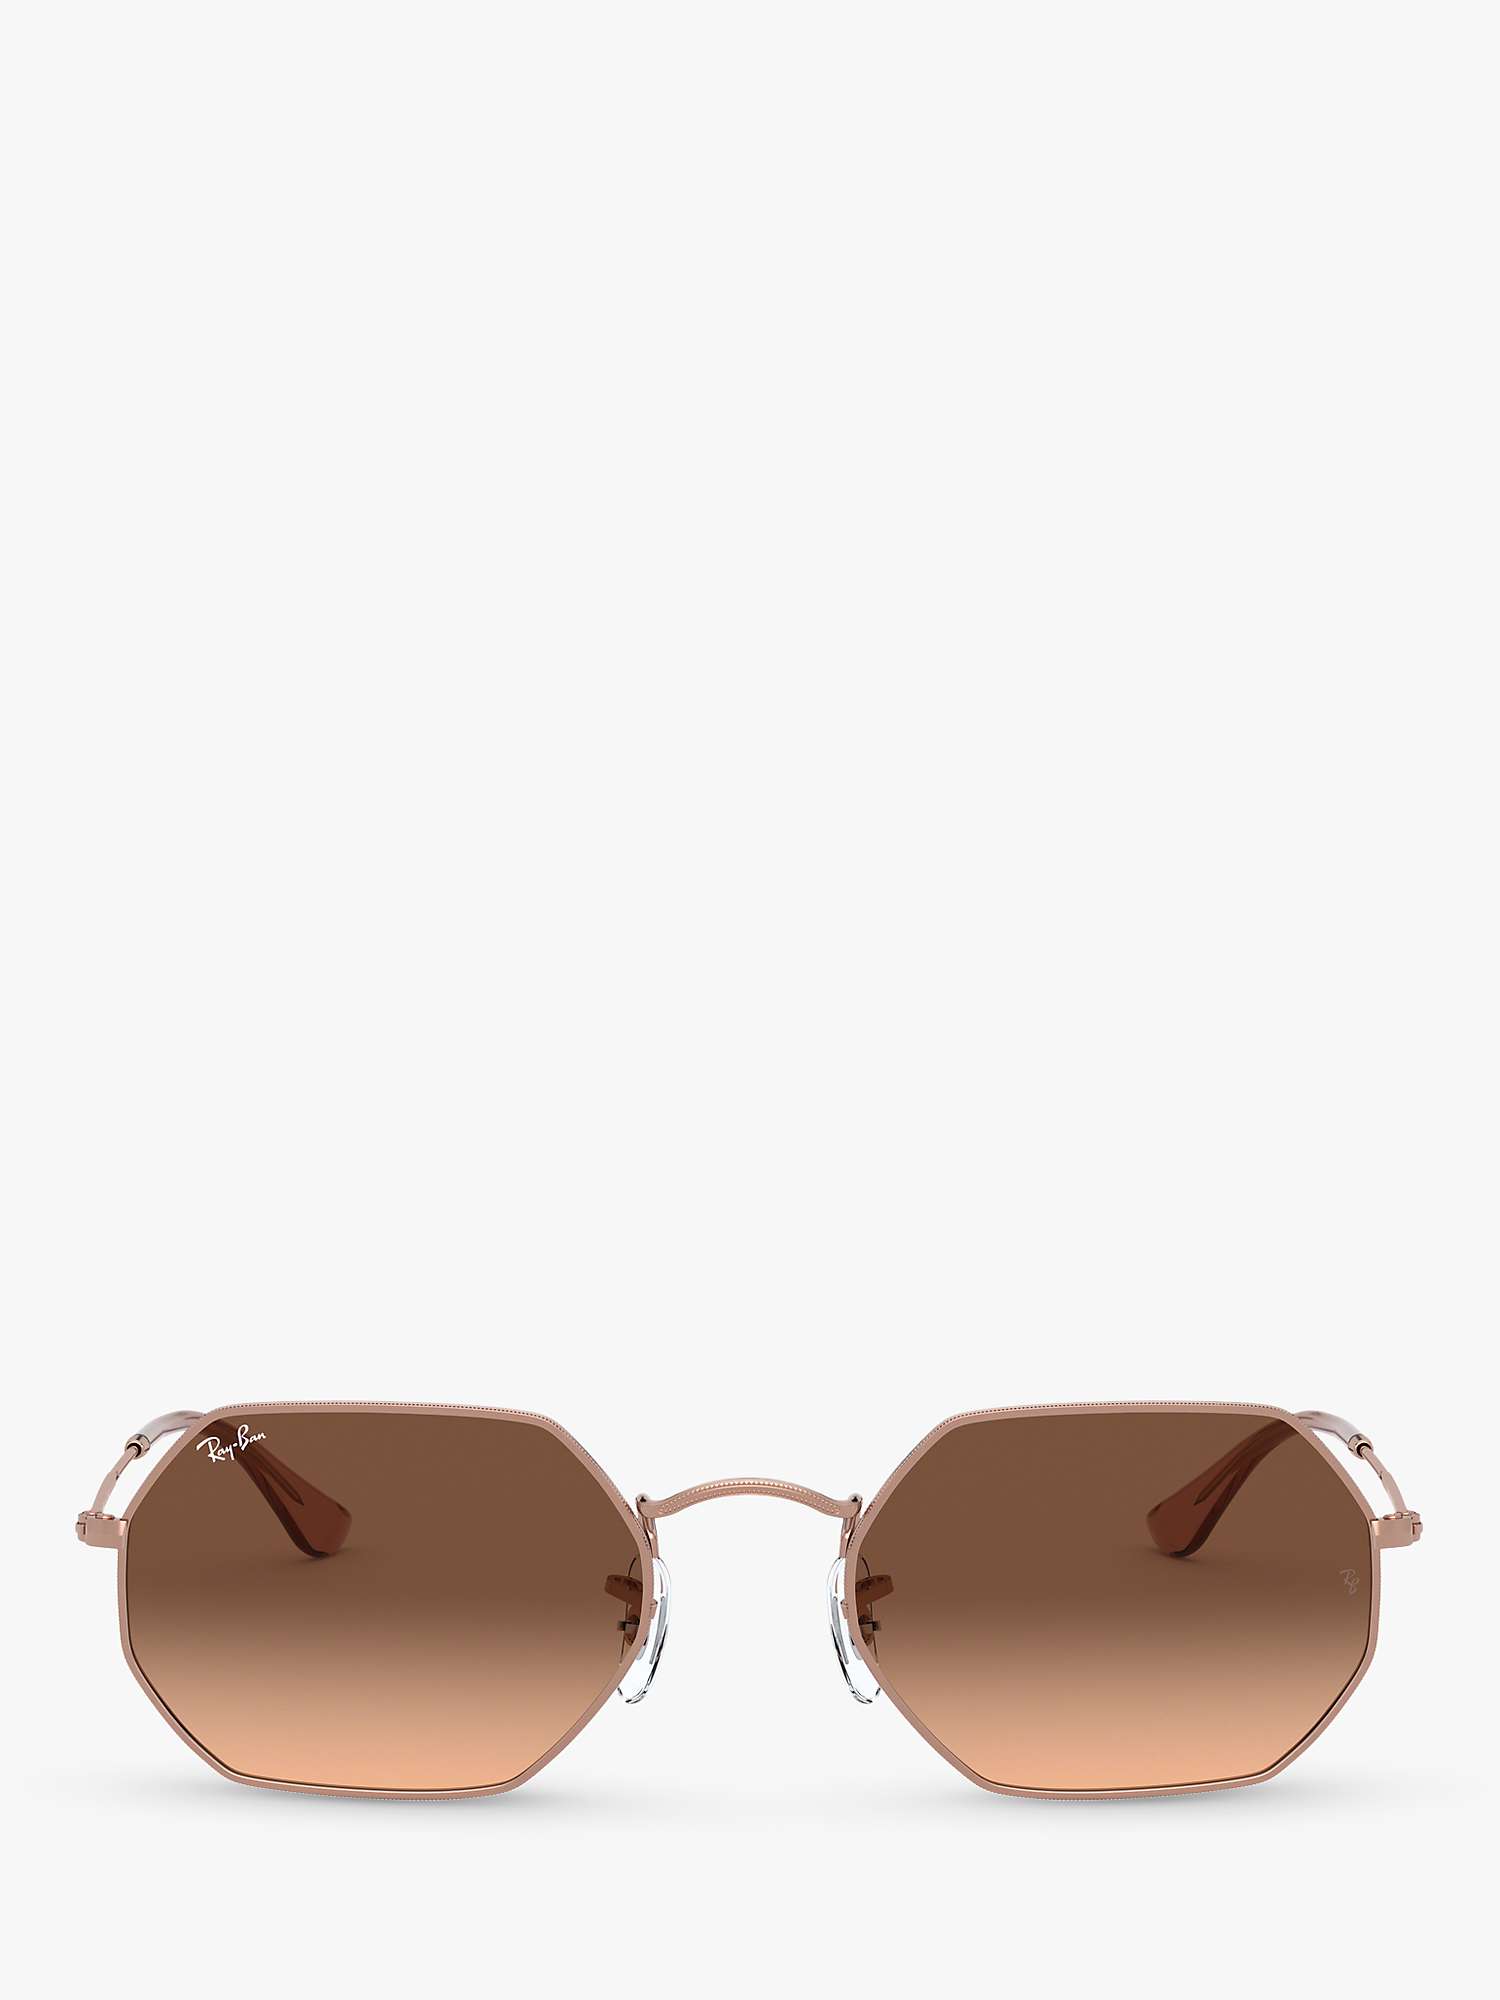 Buy Ray-Ban RB3556N Women's Heptagonal Sunglasses, Bronze/Brown Gradient Online at johnlewis.com